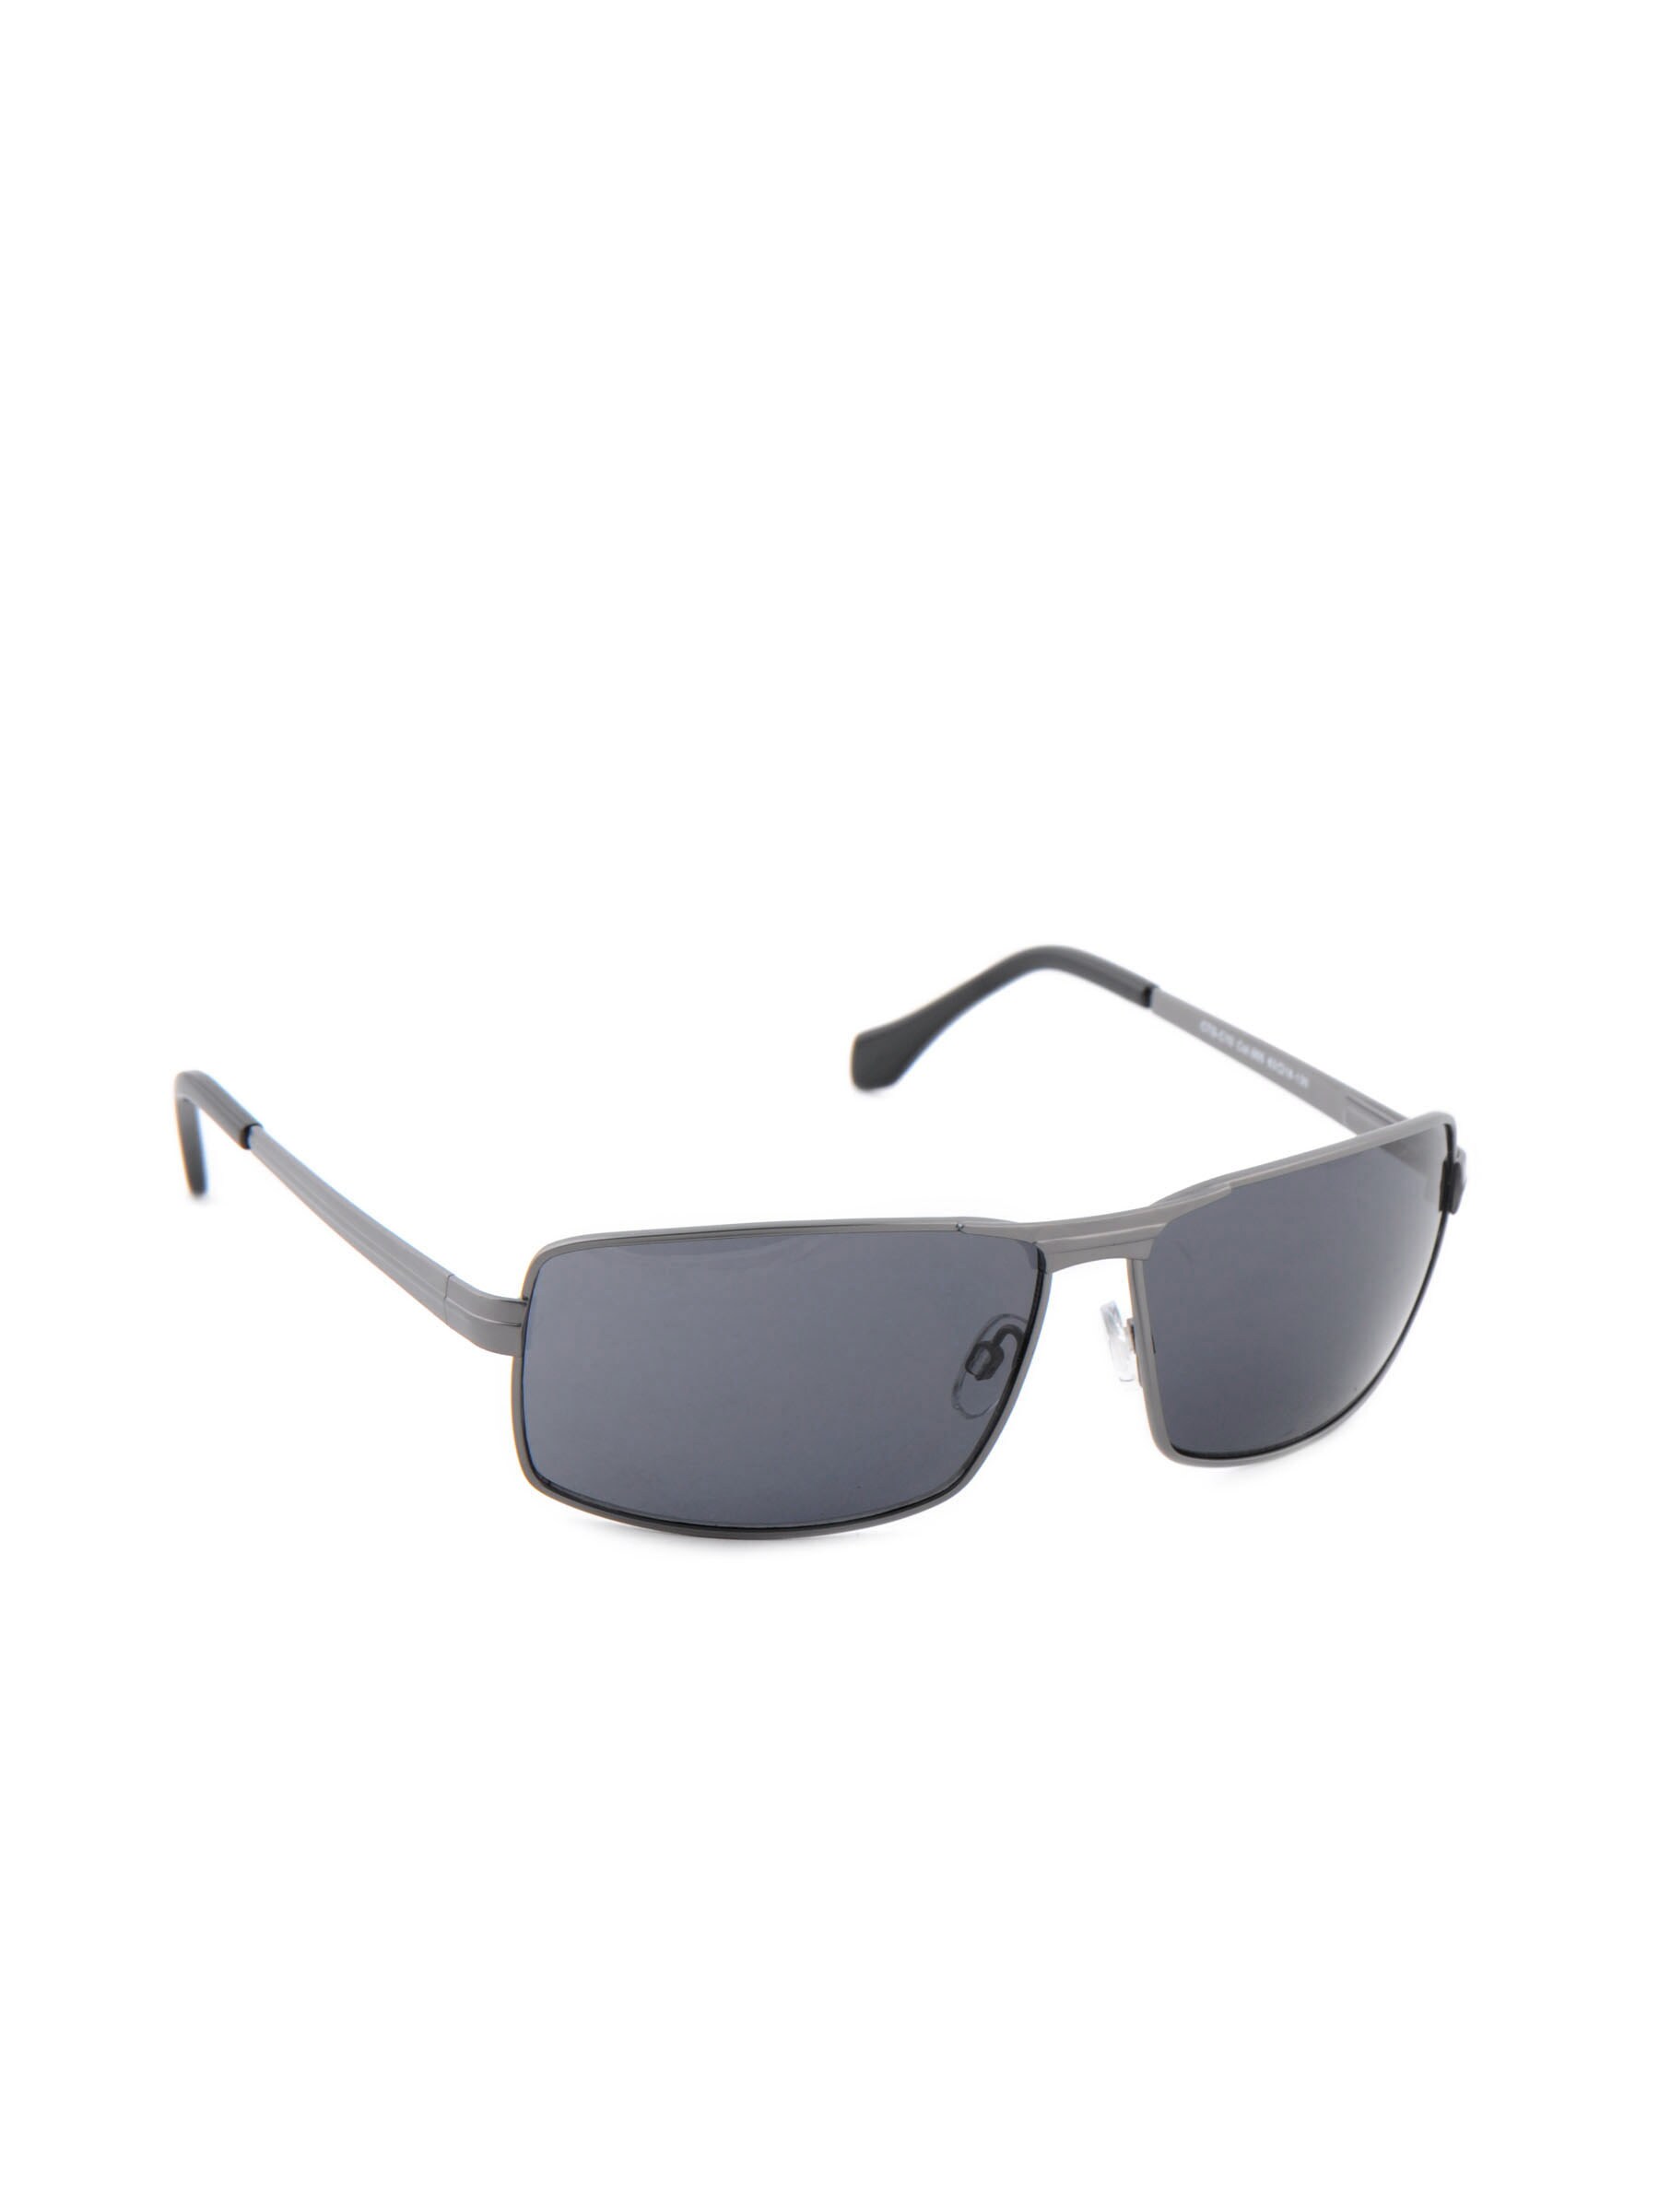 Cat Men Classic Grey Sunglasses